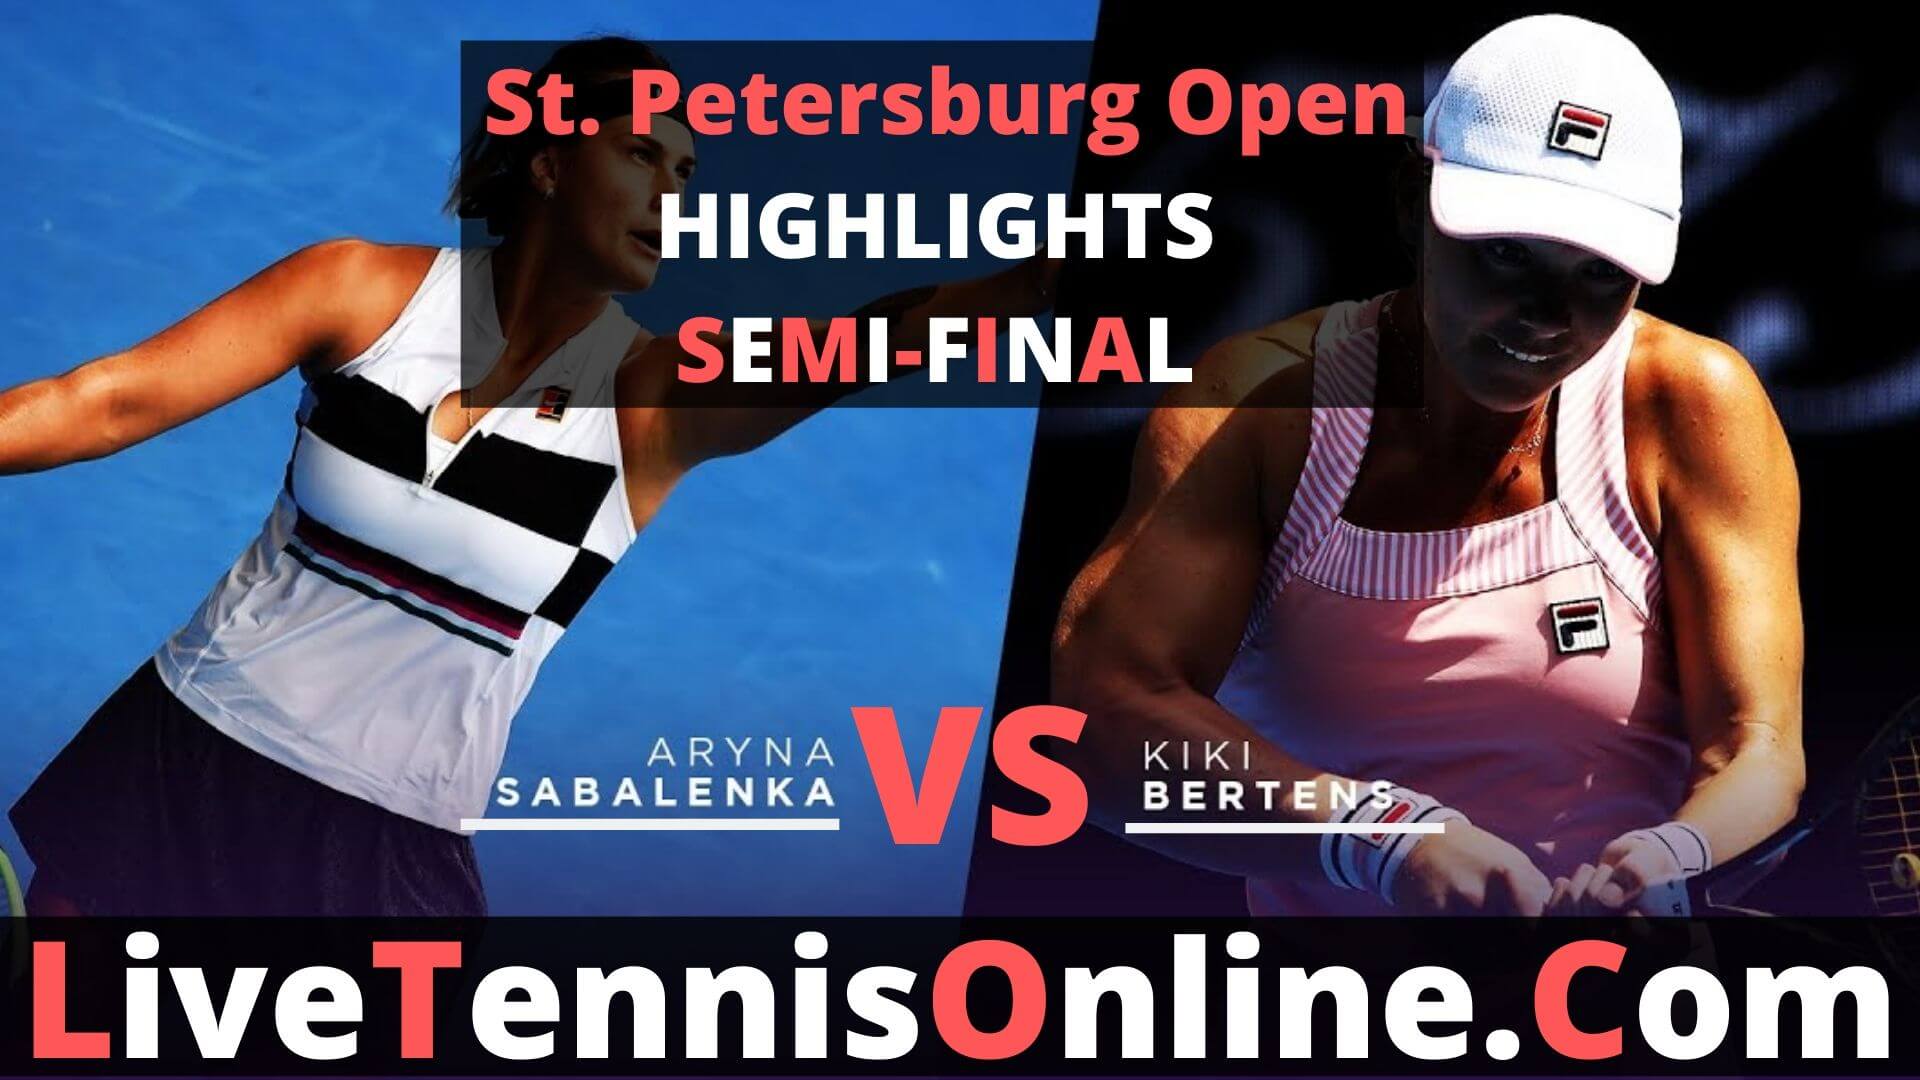 Aryna Sabalenka Vs Kiki Bertens Highlights 2019 St. Petersburg Open SF